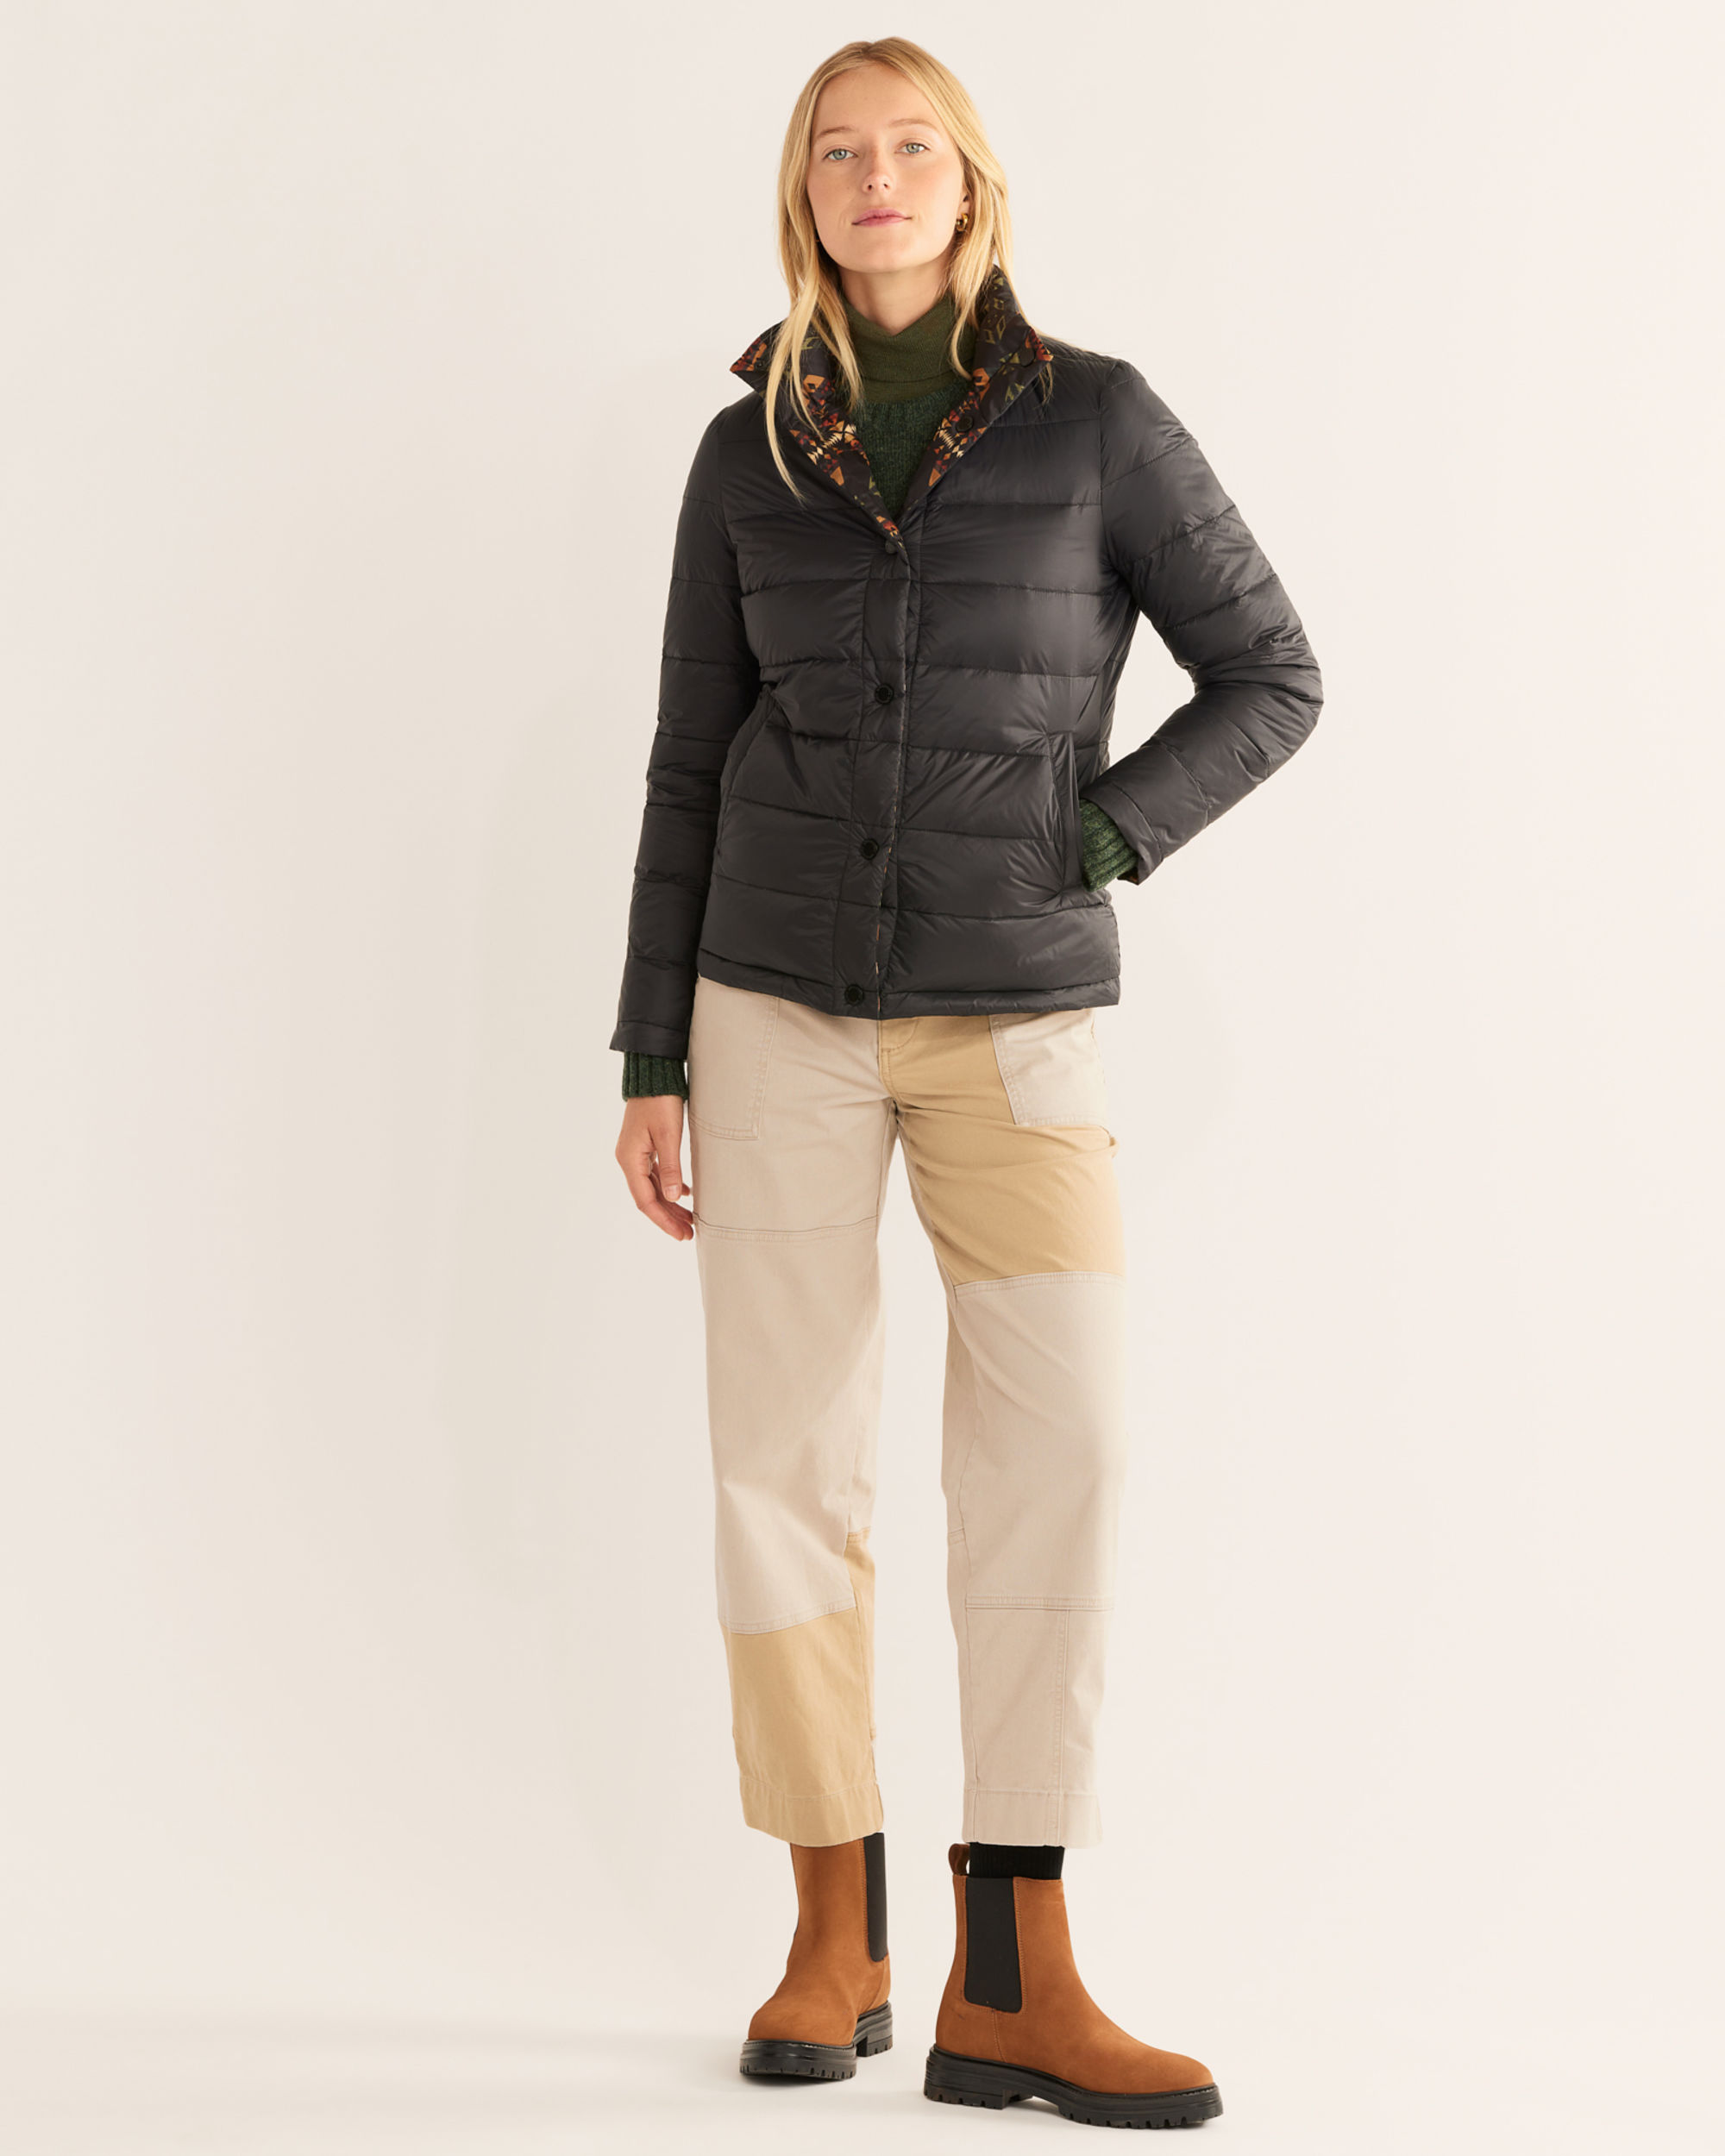 Wholesale women hot sale zip up jacket reversible wear puff vest